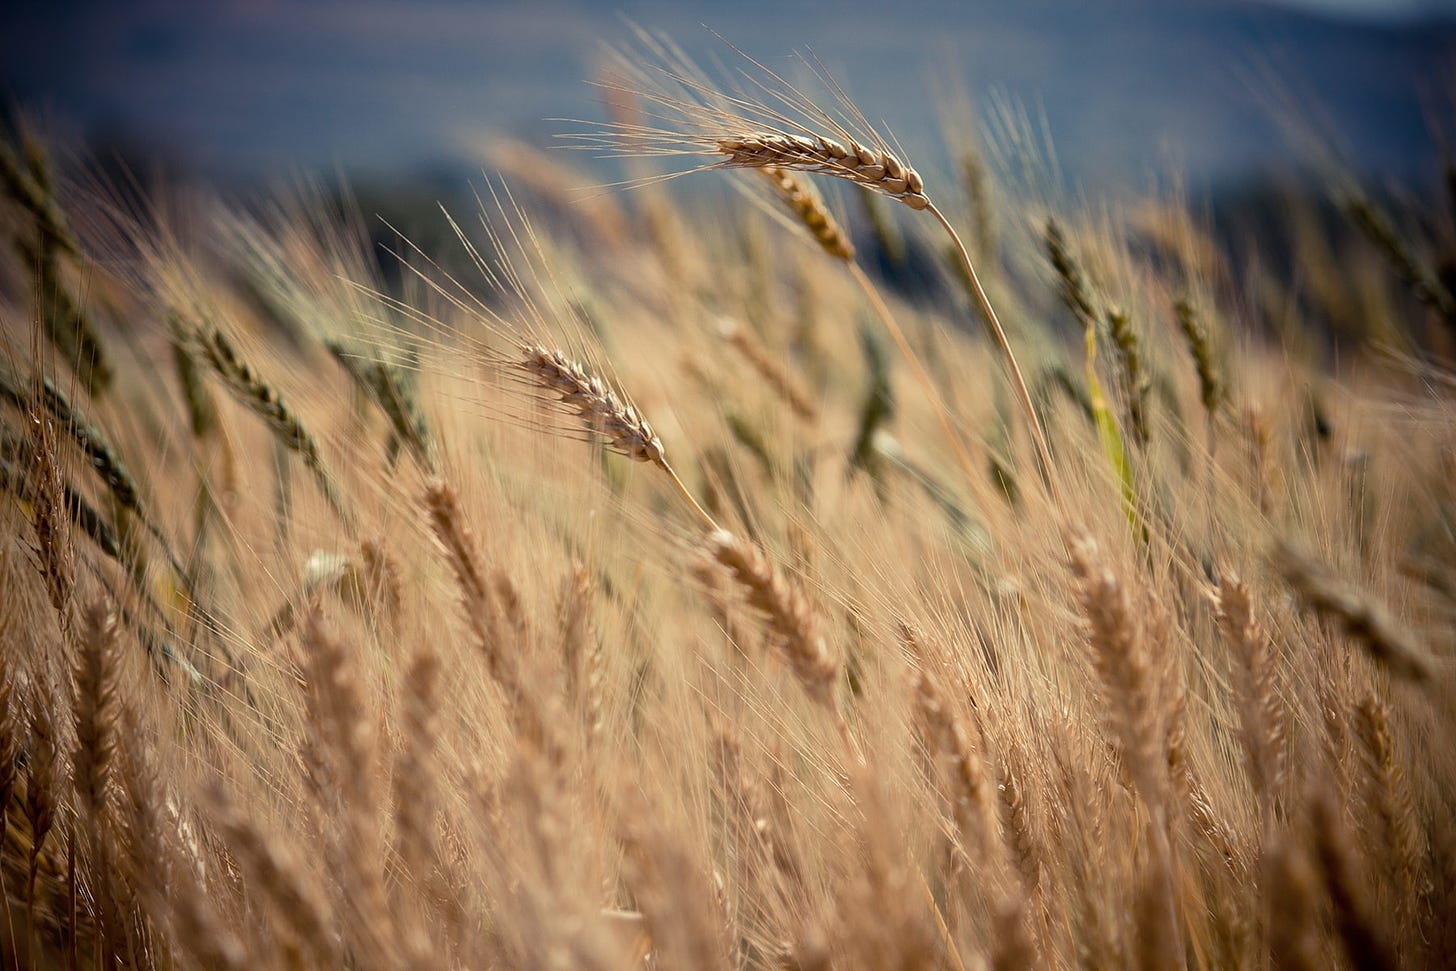 Field of ripe wheat stalks against a dark sky